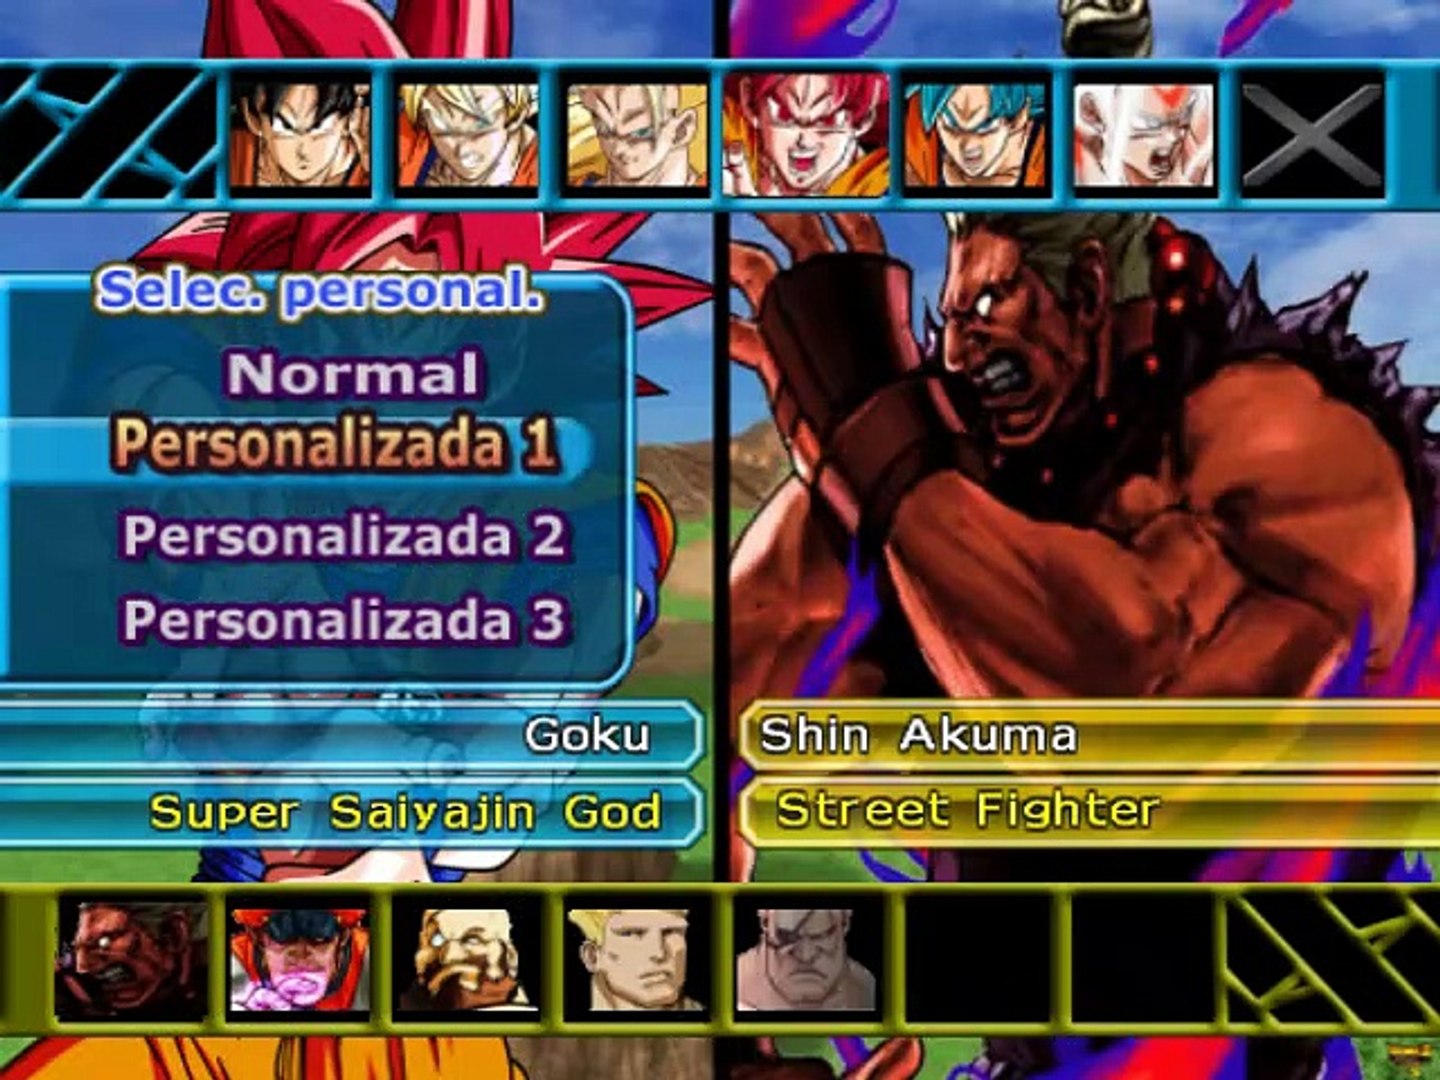 Dragon Ball Z - Budokai Tenkaichi 3 ROM - PS2 Download - Emulator